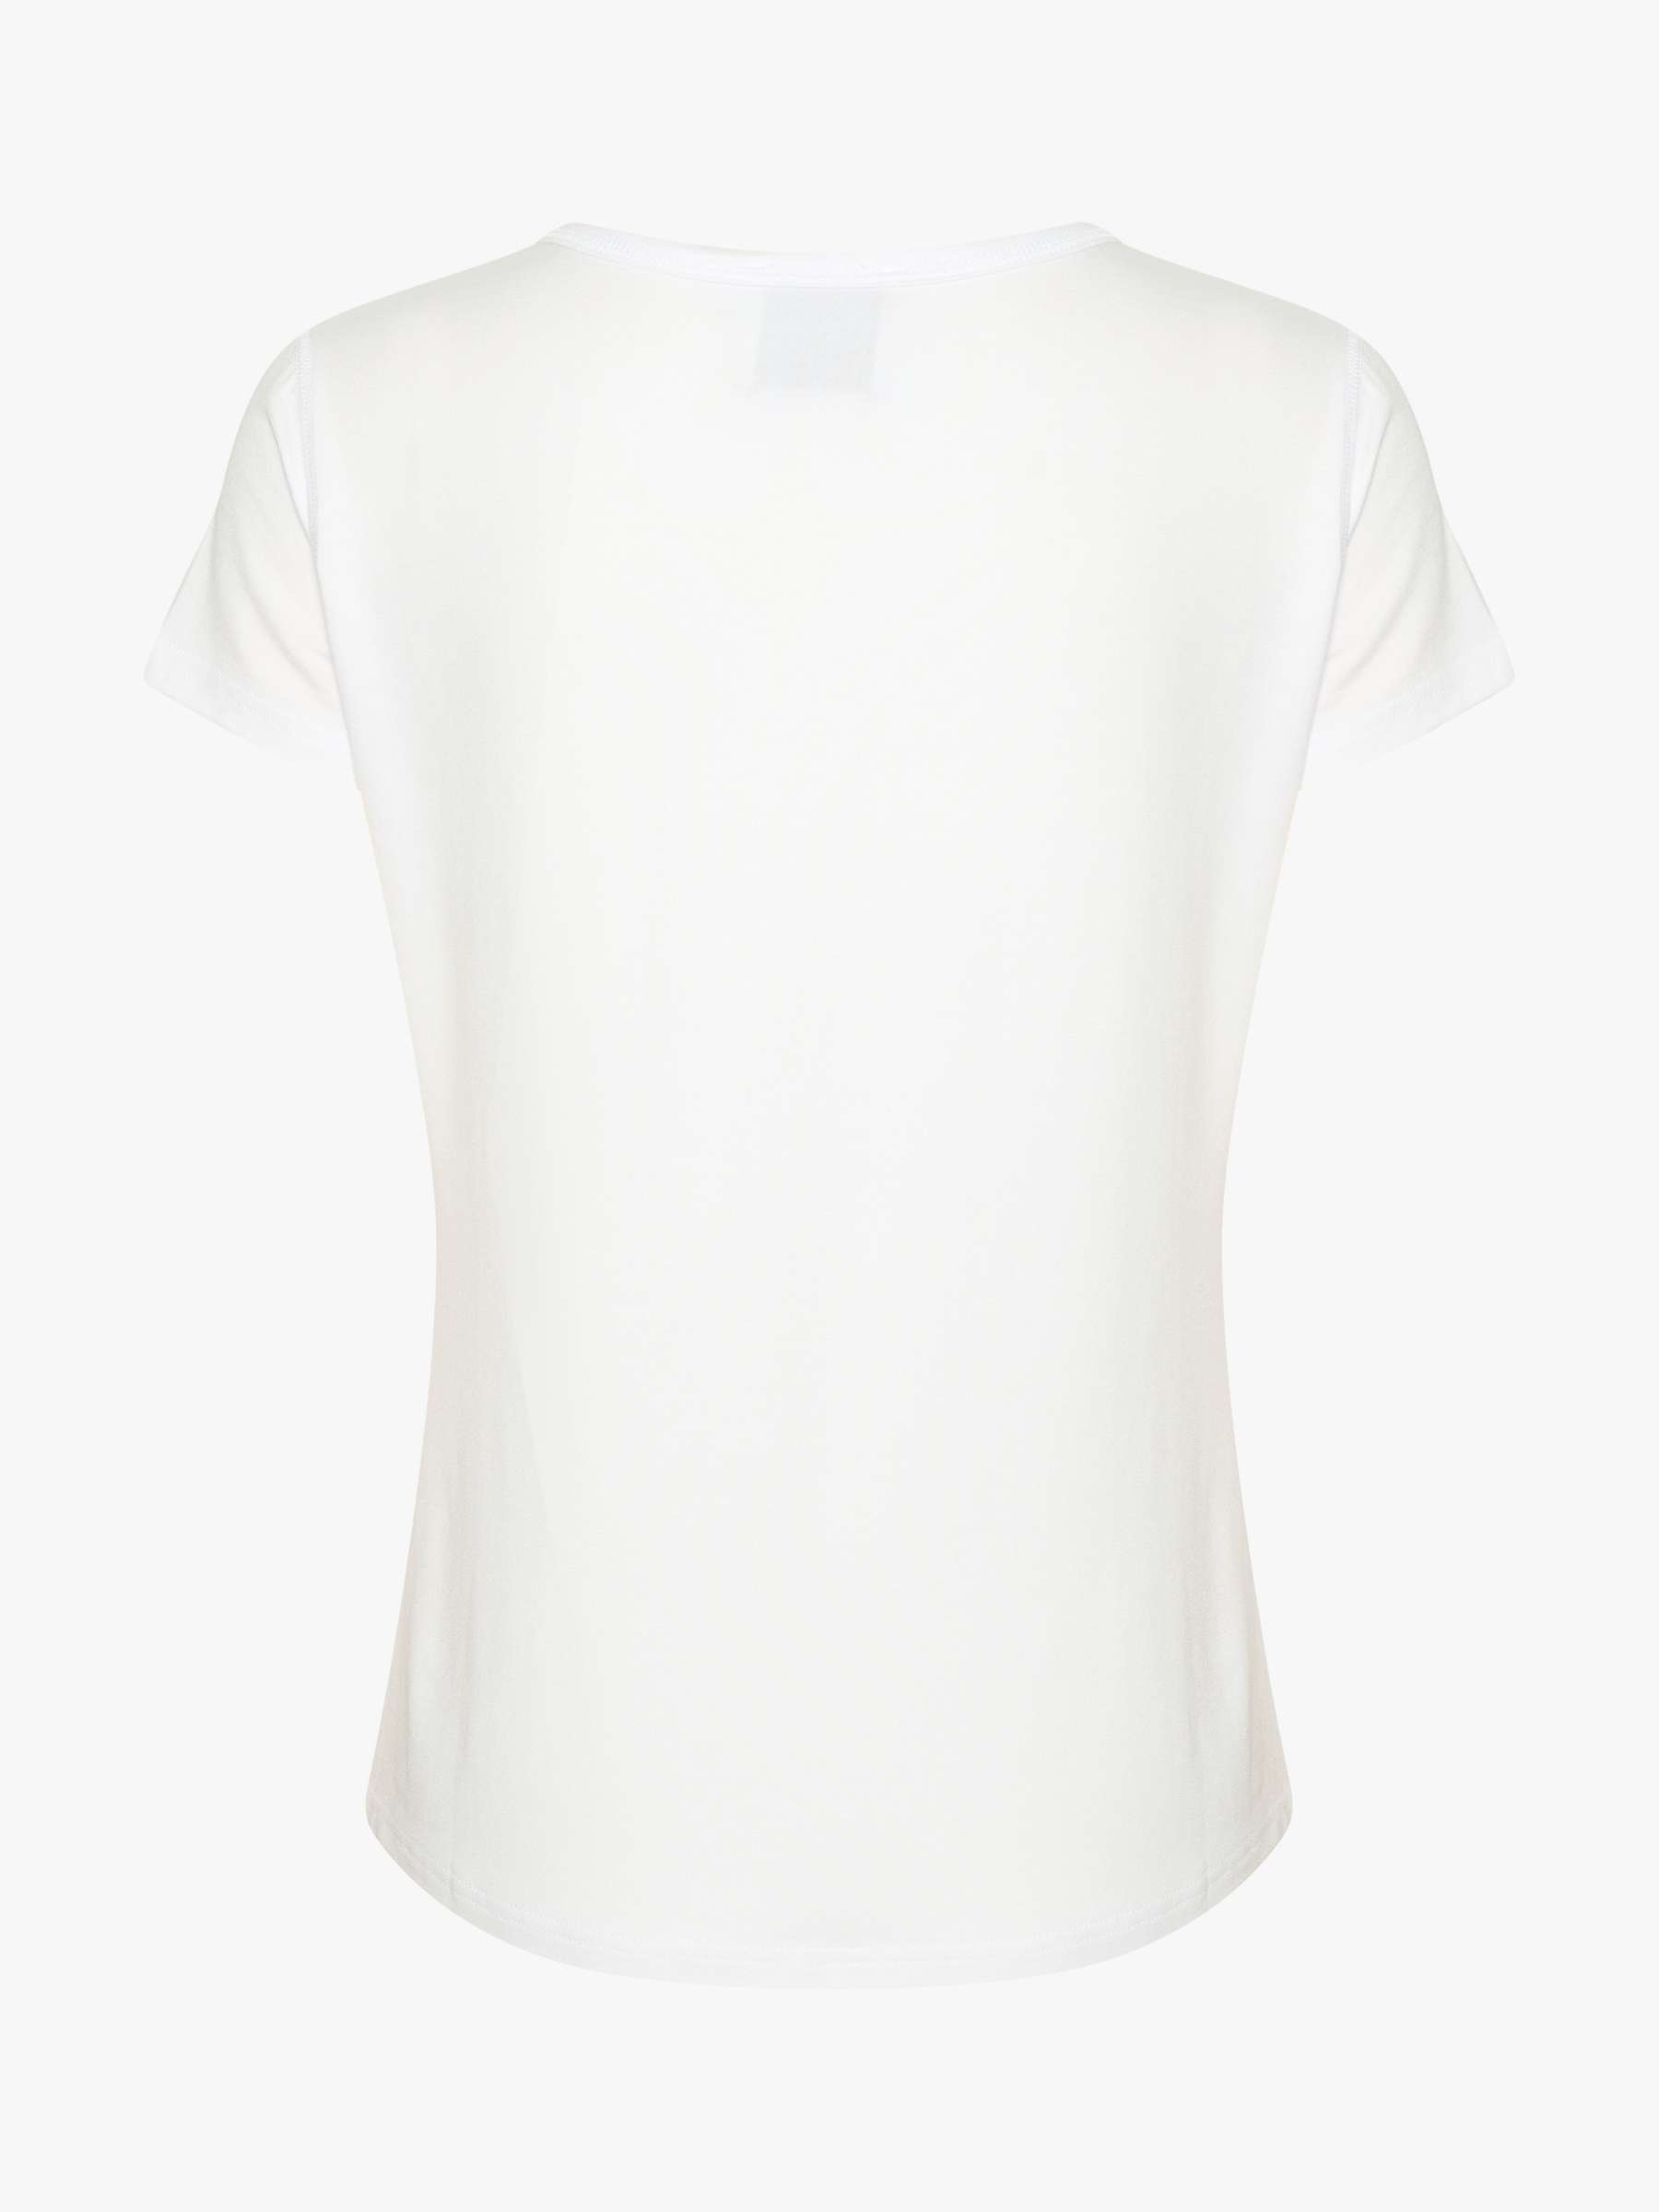 Buy MY ESSENTIAL WARDROBE Short Sleeve Crew Neck Modal T-Shirt, Bright White Online at johnlewis.com